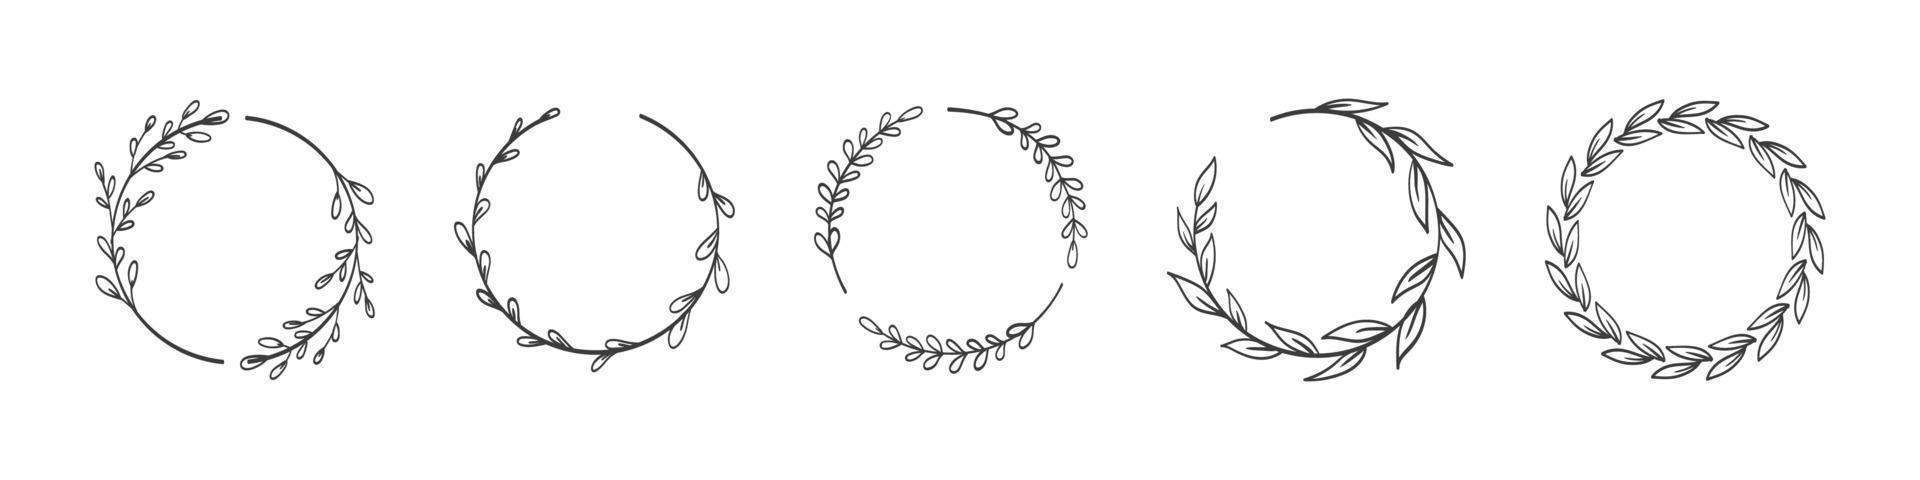 ramas de laureles. ilustración vectorial de coronas dibujadas a mano. marcos de corona floral de garabato vector